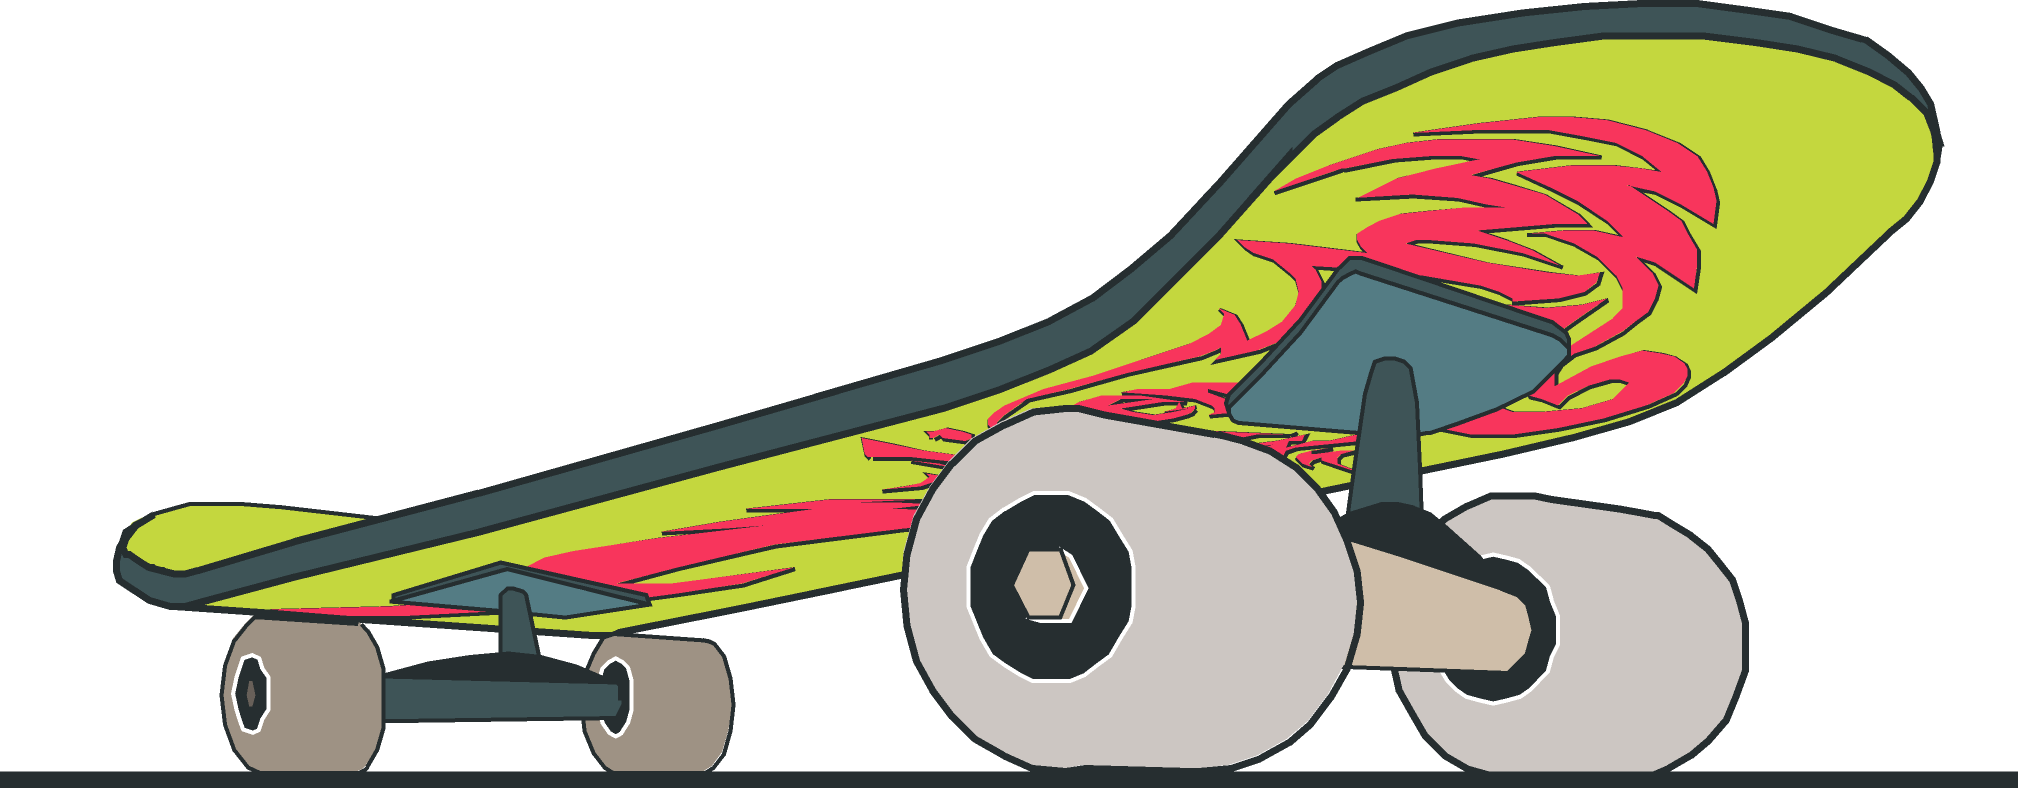 Skateboard clip art - Clipartix